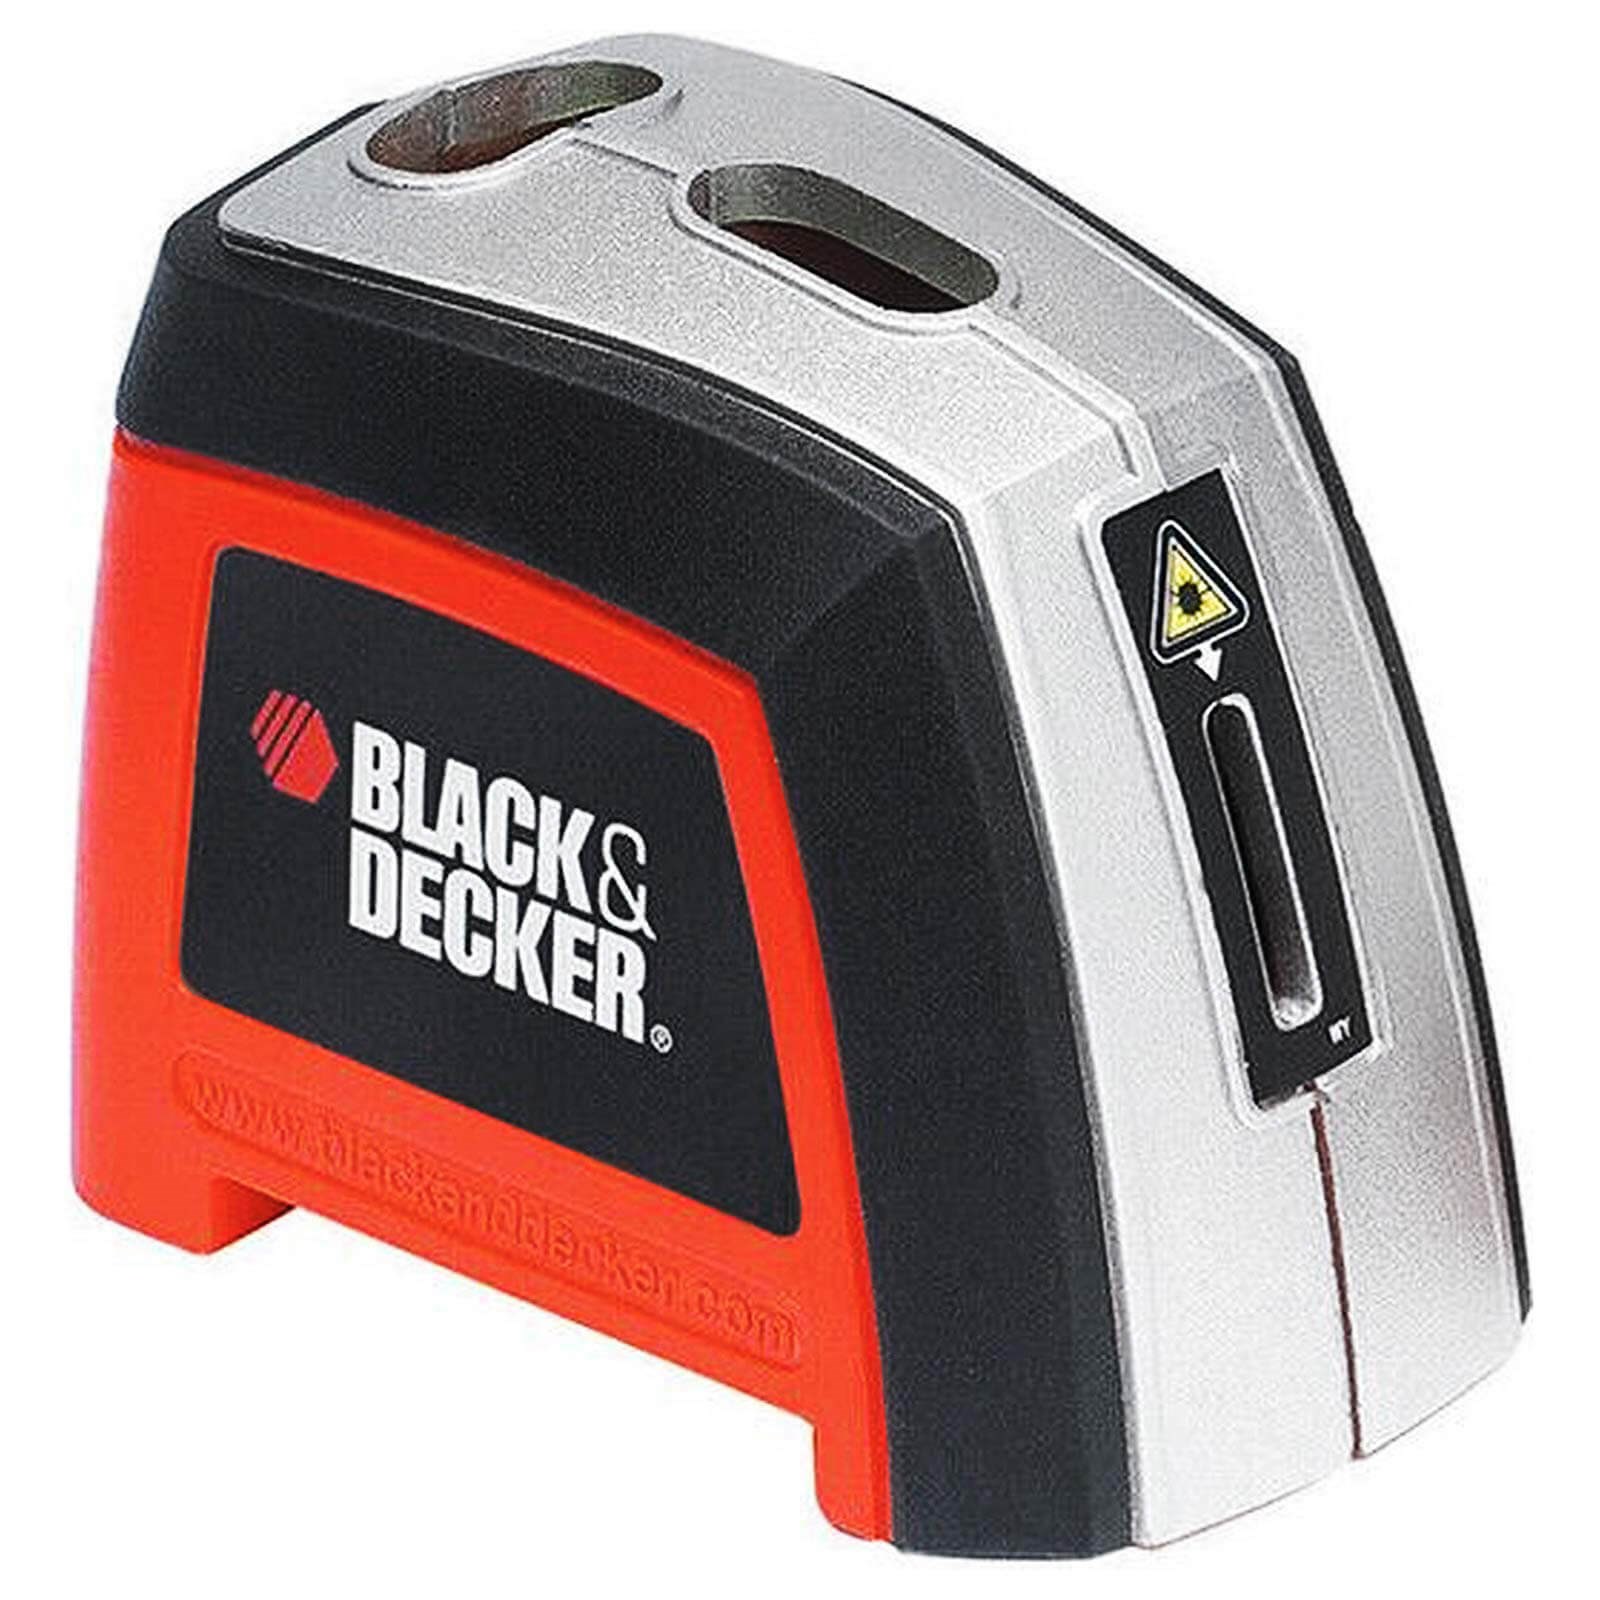 Black & Decker Laser Levels